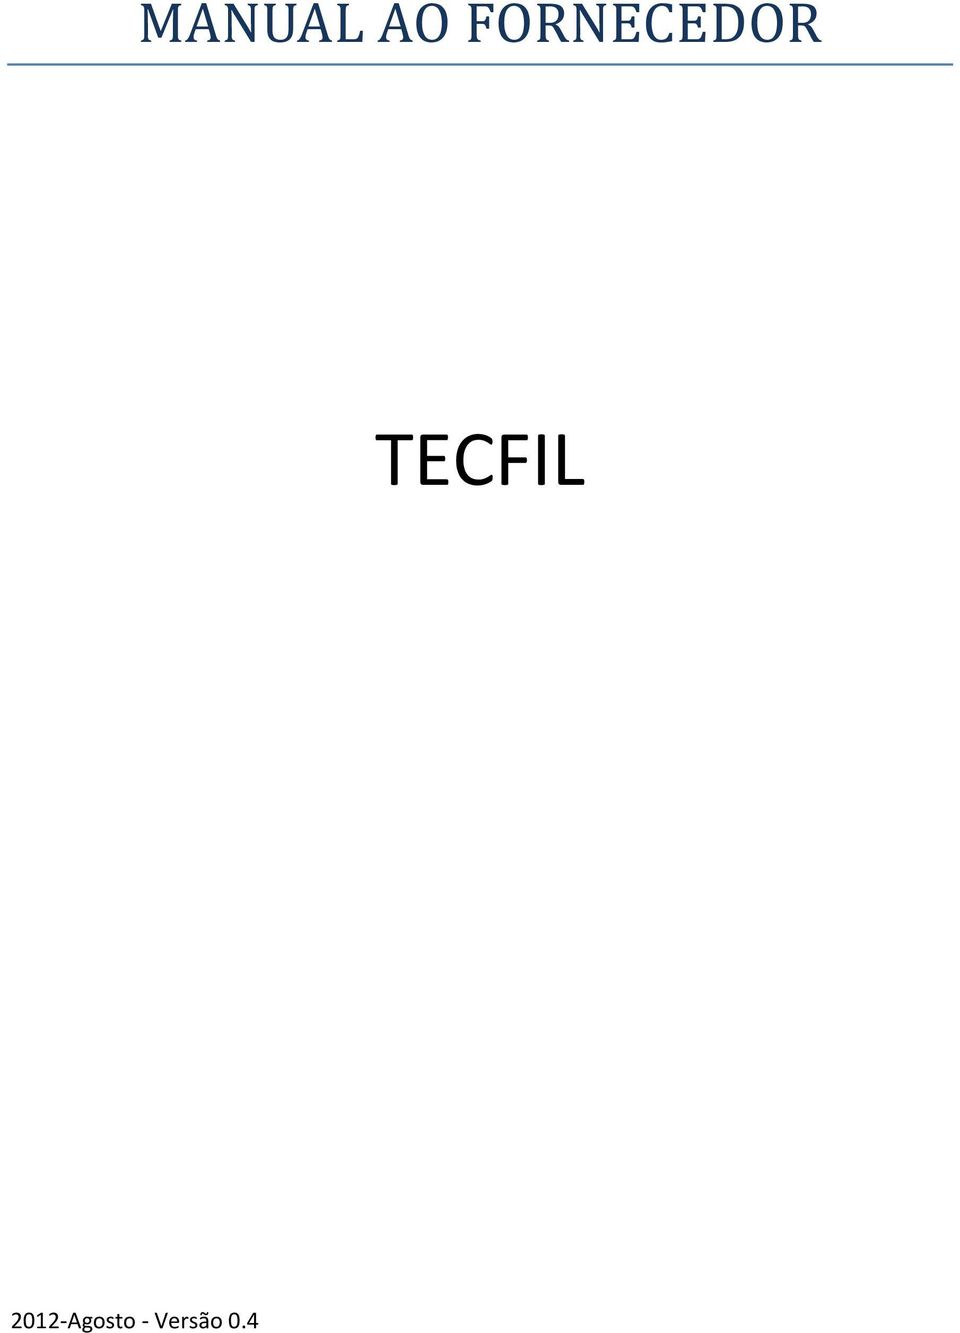 TECFIL